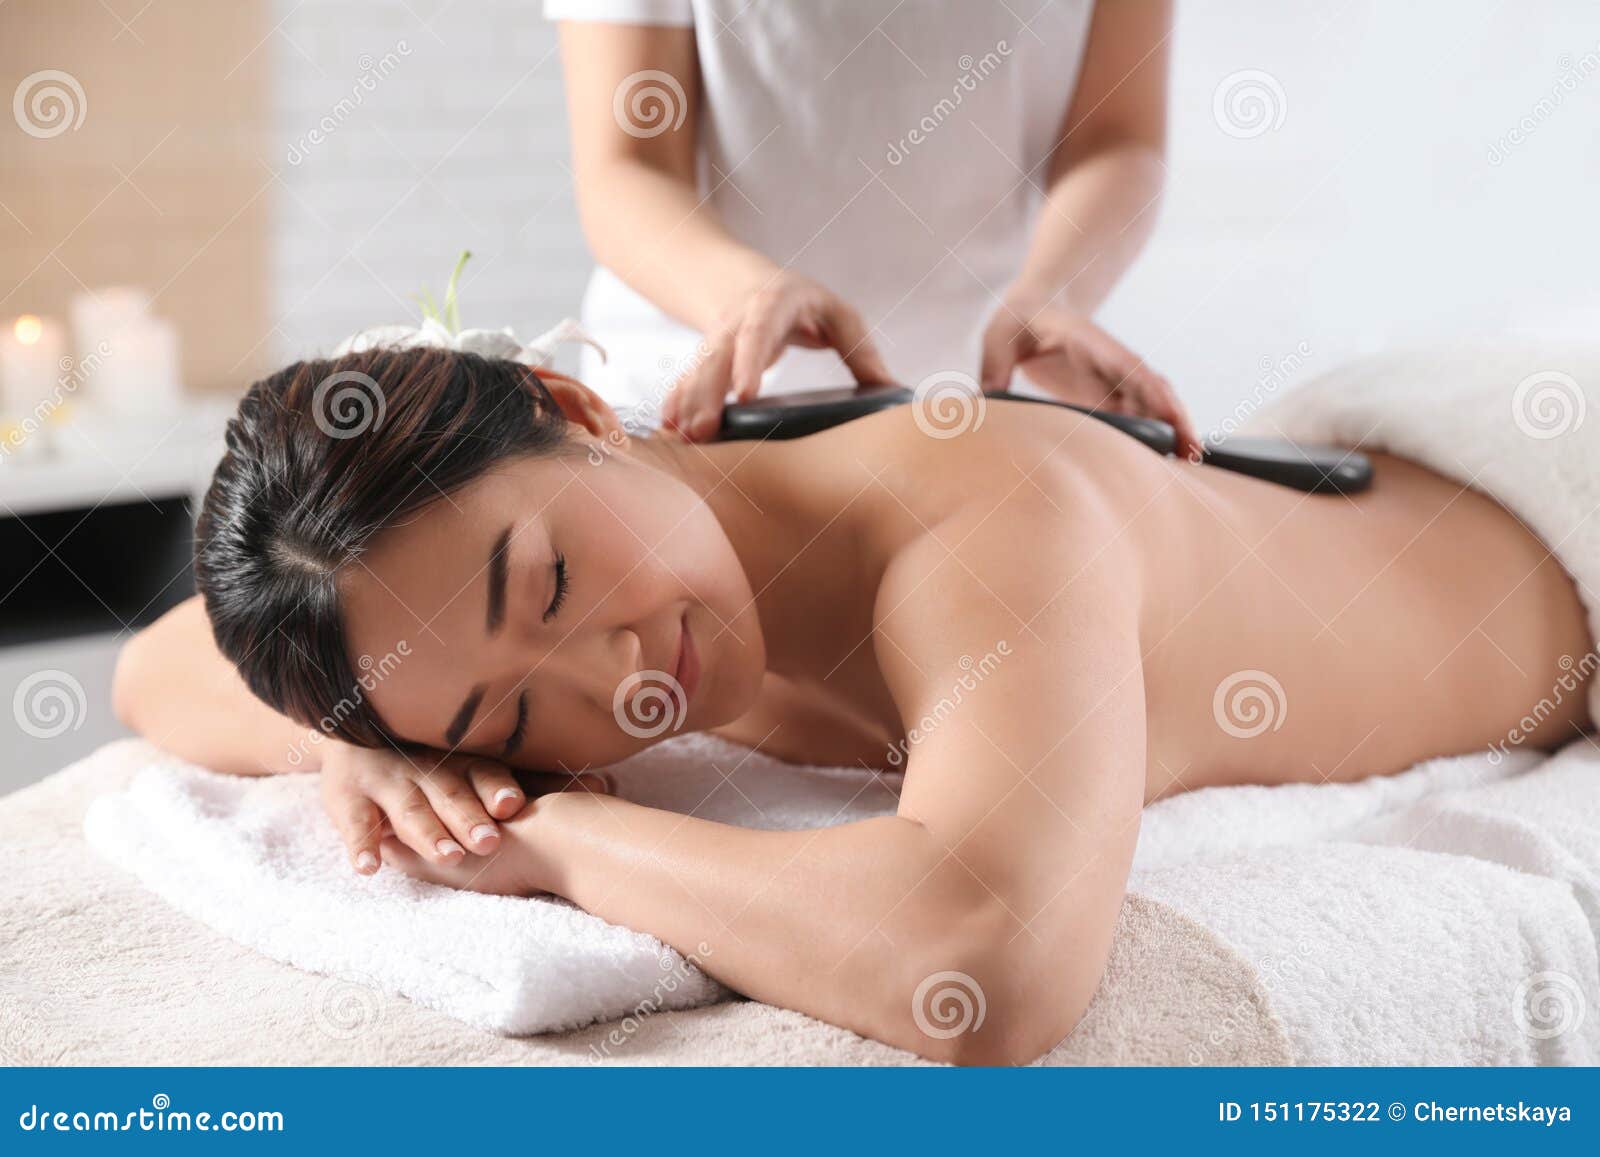 asian hot massage